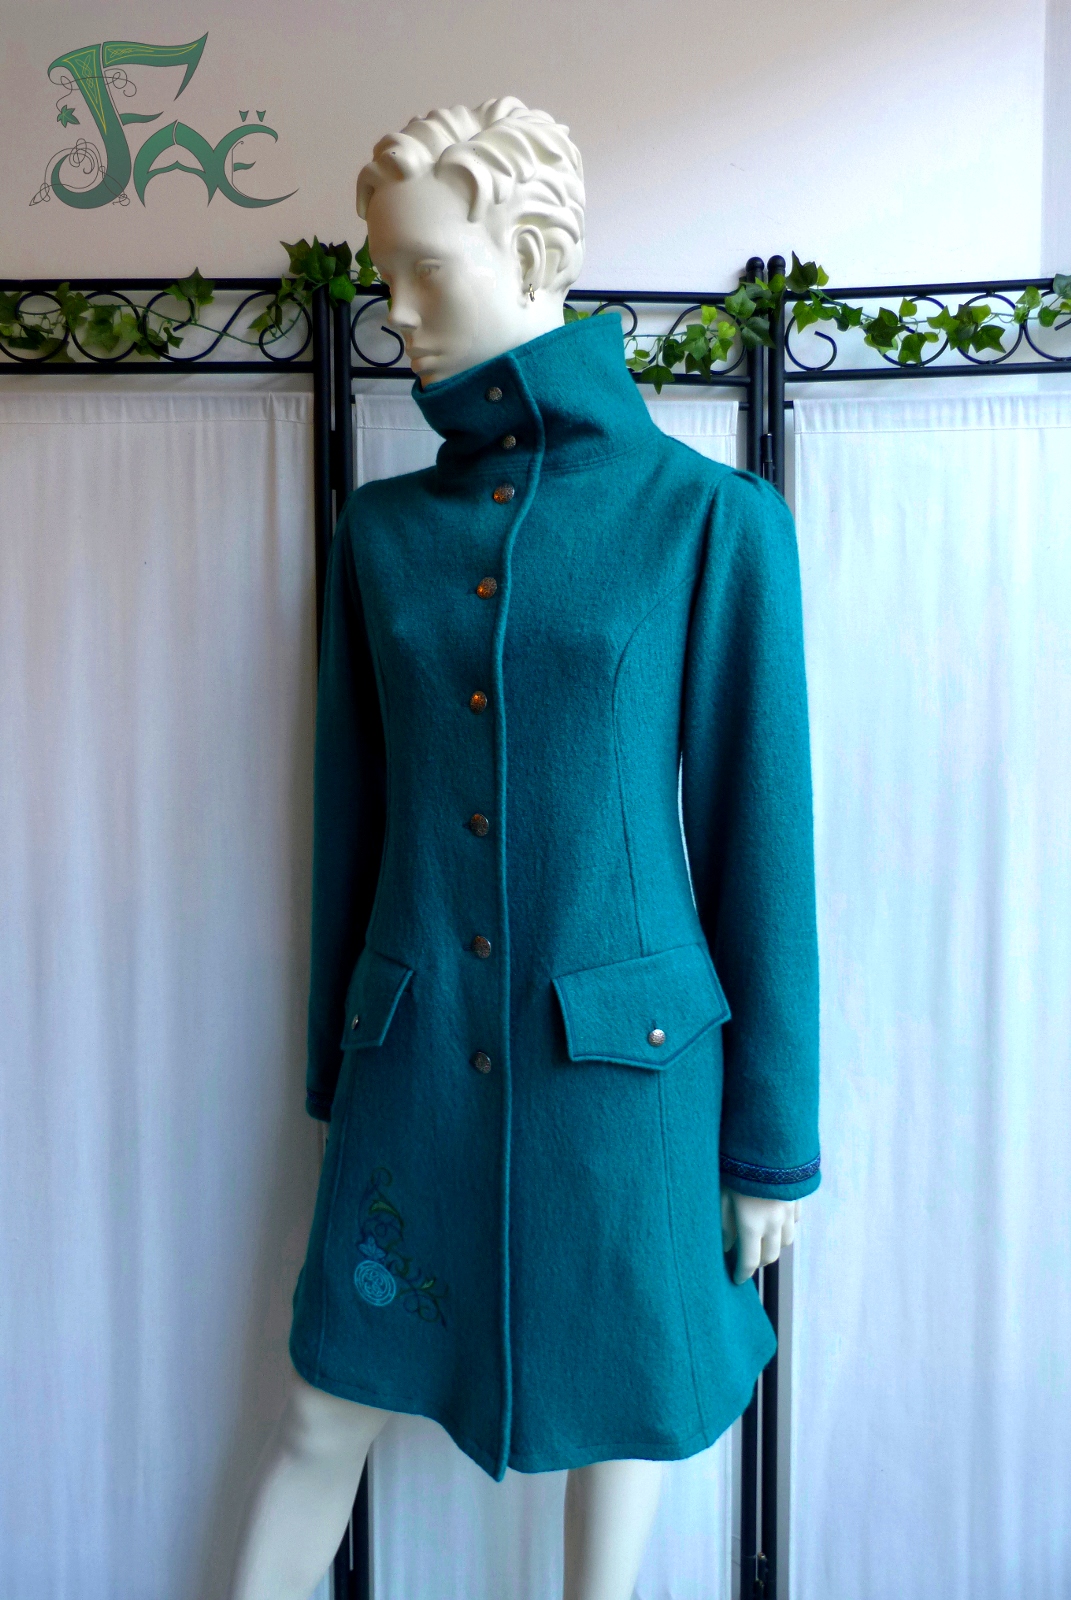 Manteau turquoise brodé